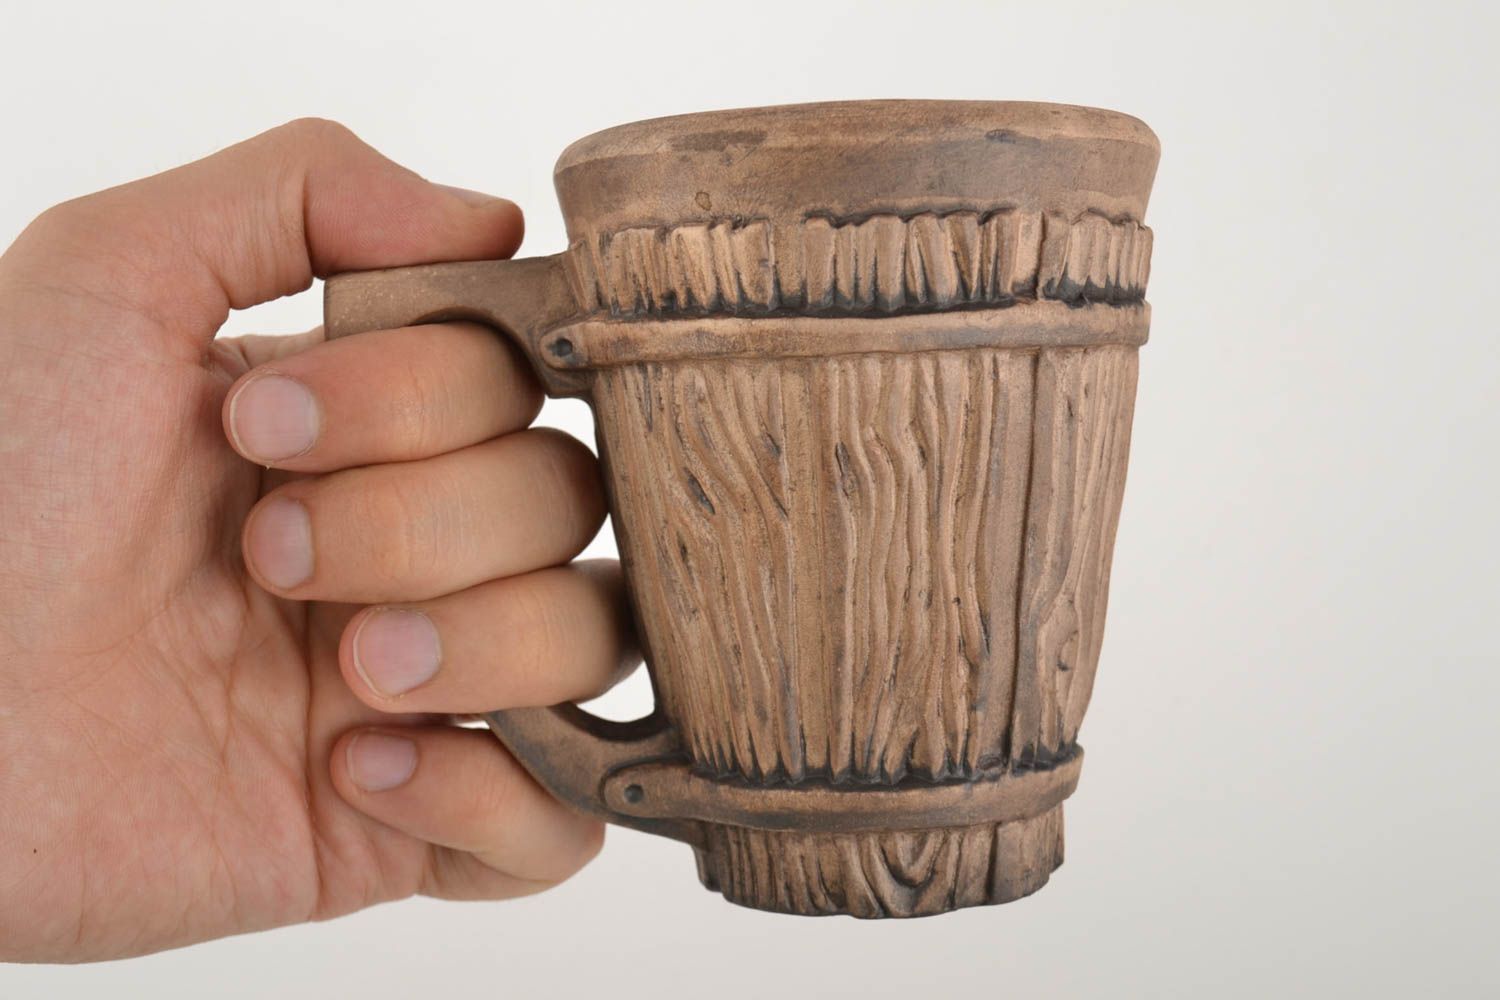 11 oz clay tea mug with handle in fake wood style 0,75 lb photo 3